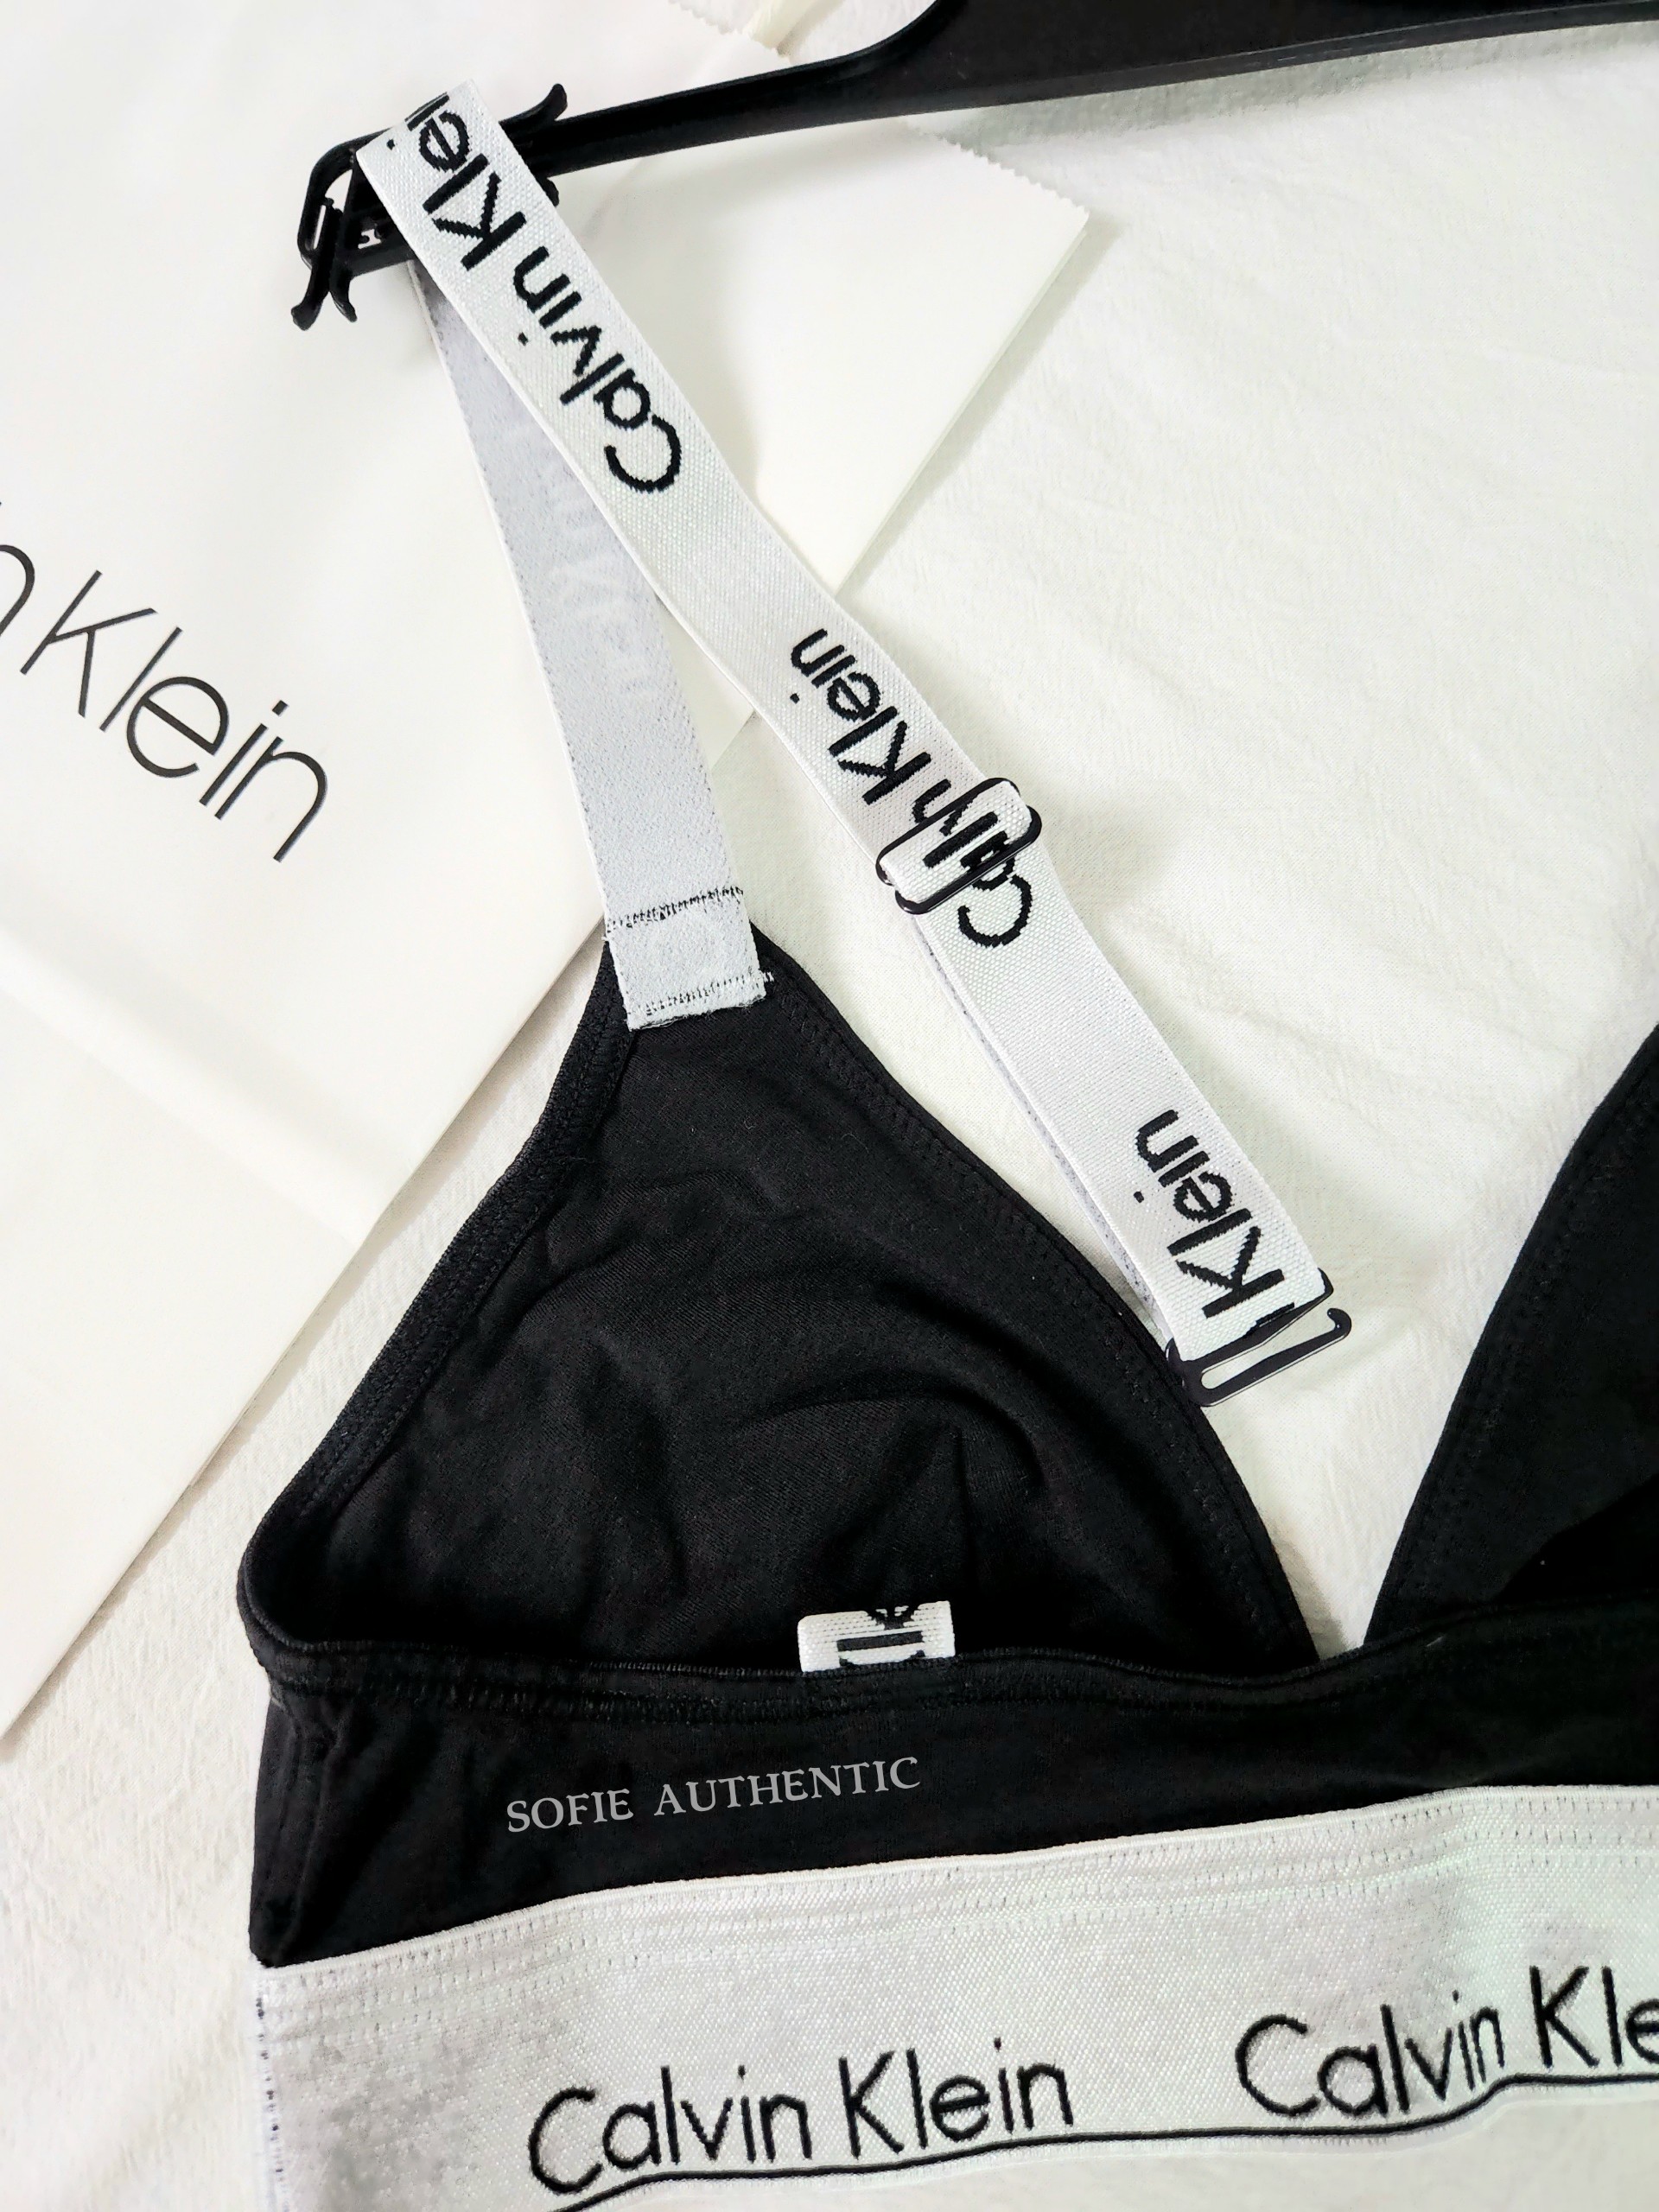 Calvin Klein Women's Modern Cotton Unlined Bralette - ShopStyle Bras